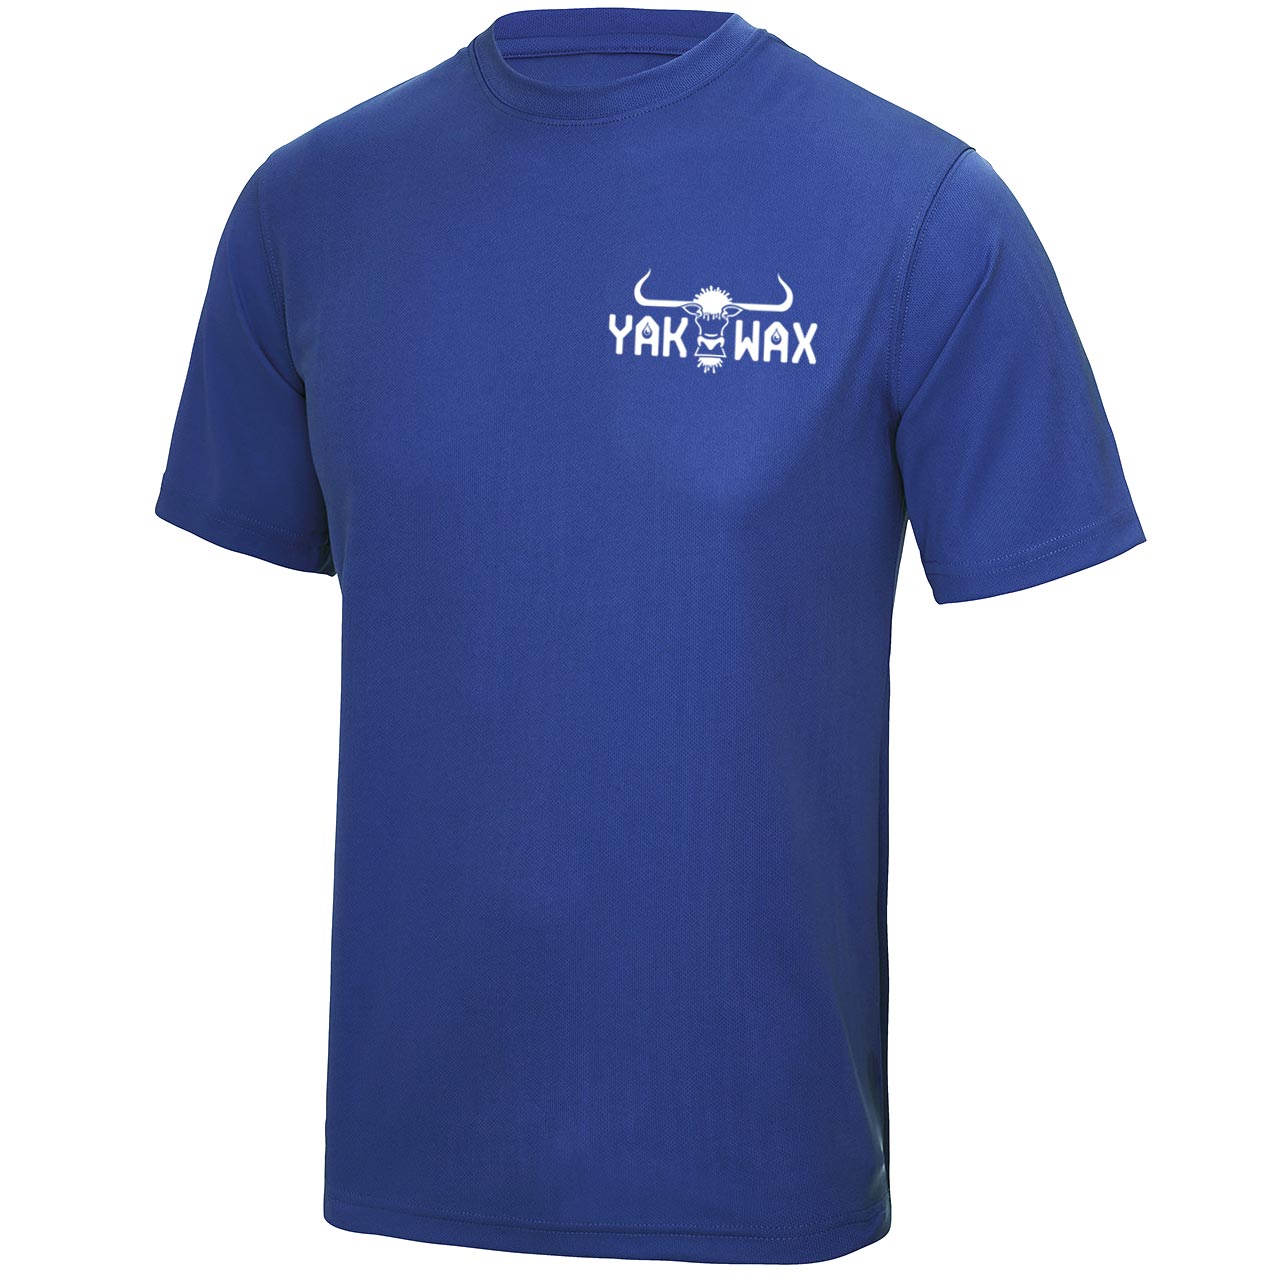 Yakwax Youth Kids OG Logo Sports Cool T-Shirt - Blue - Boys Skate Brand T-Shirt by Yakwax